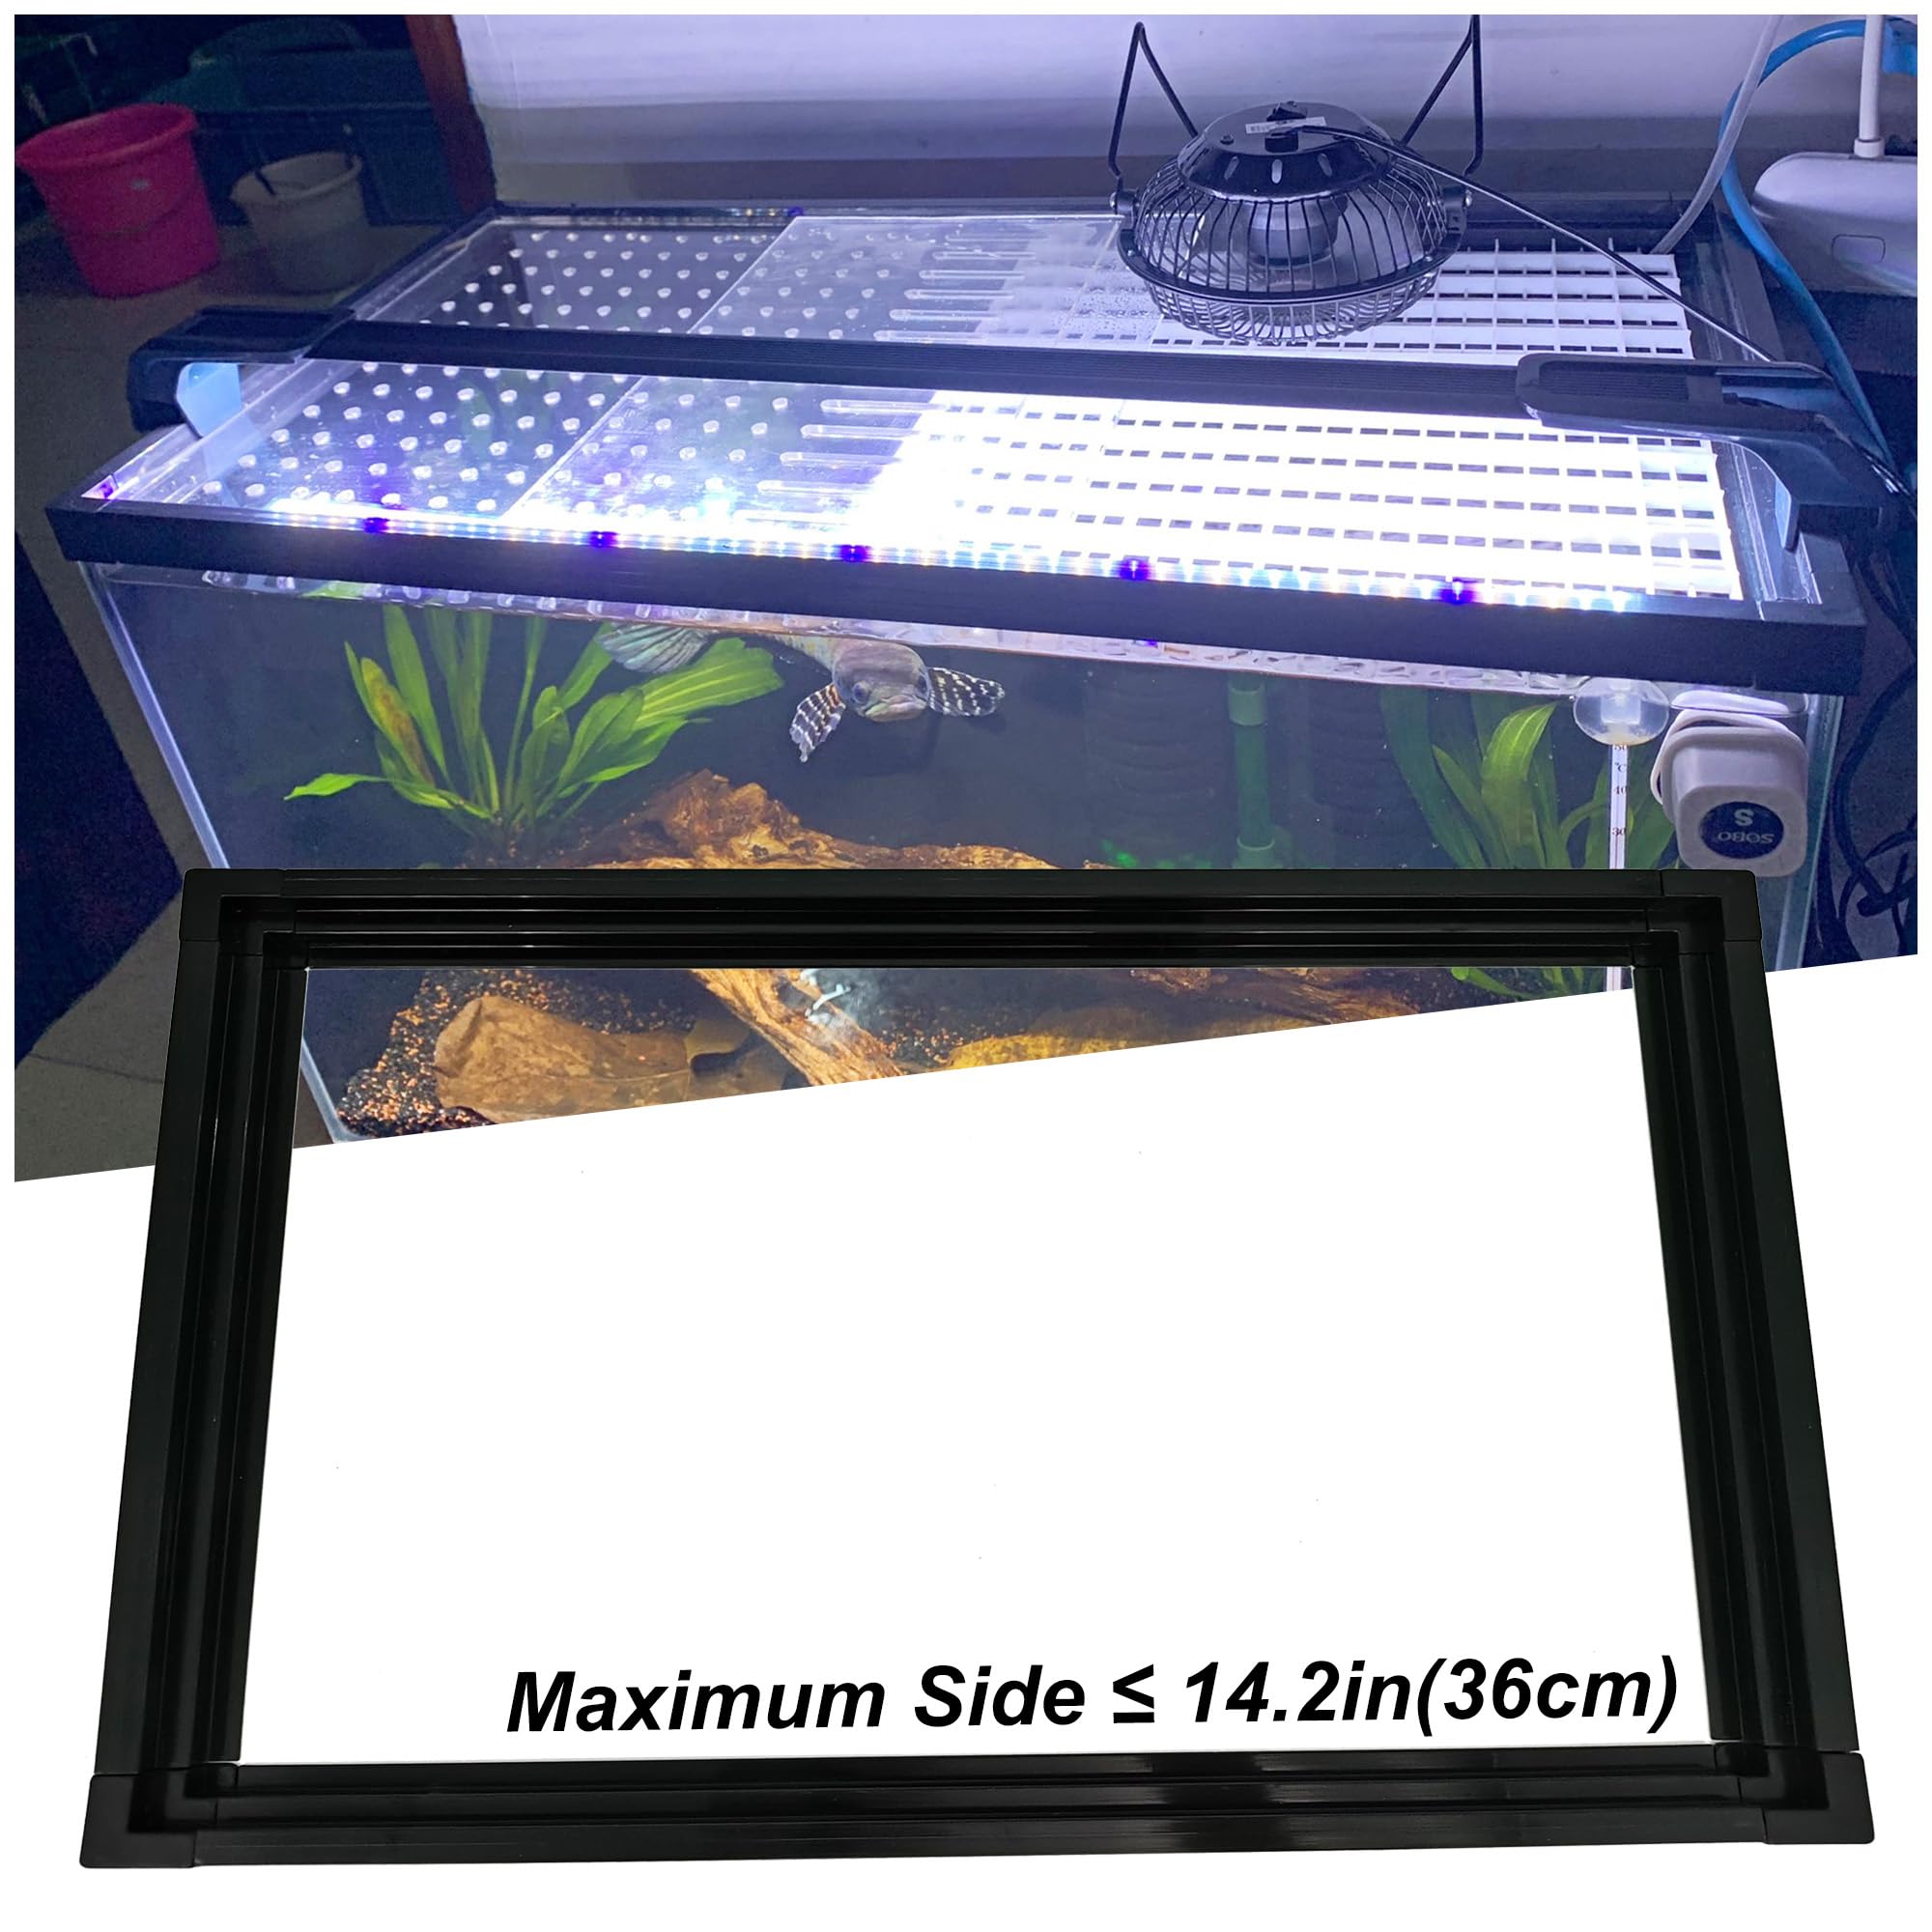 SPANSEE Aquarium Top Cover Holder: Upgraded Rim Frame for Fish Tanks